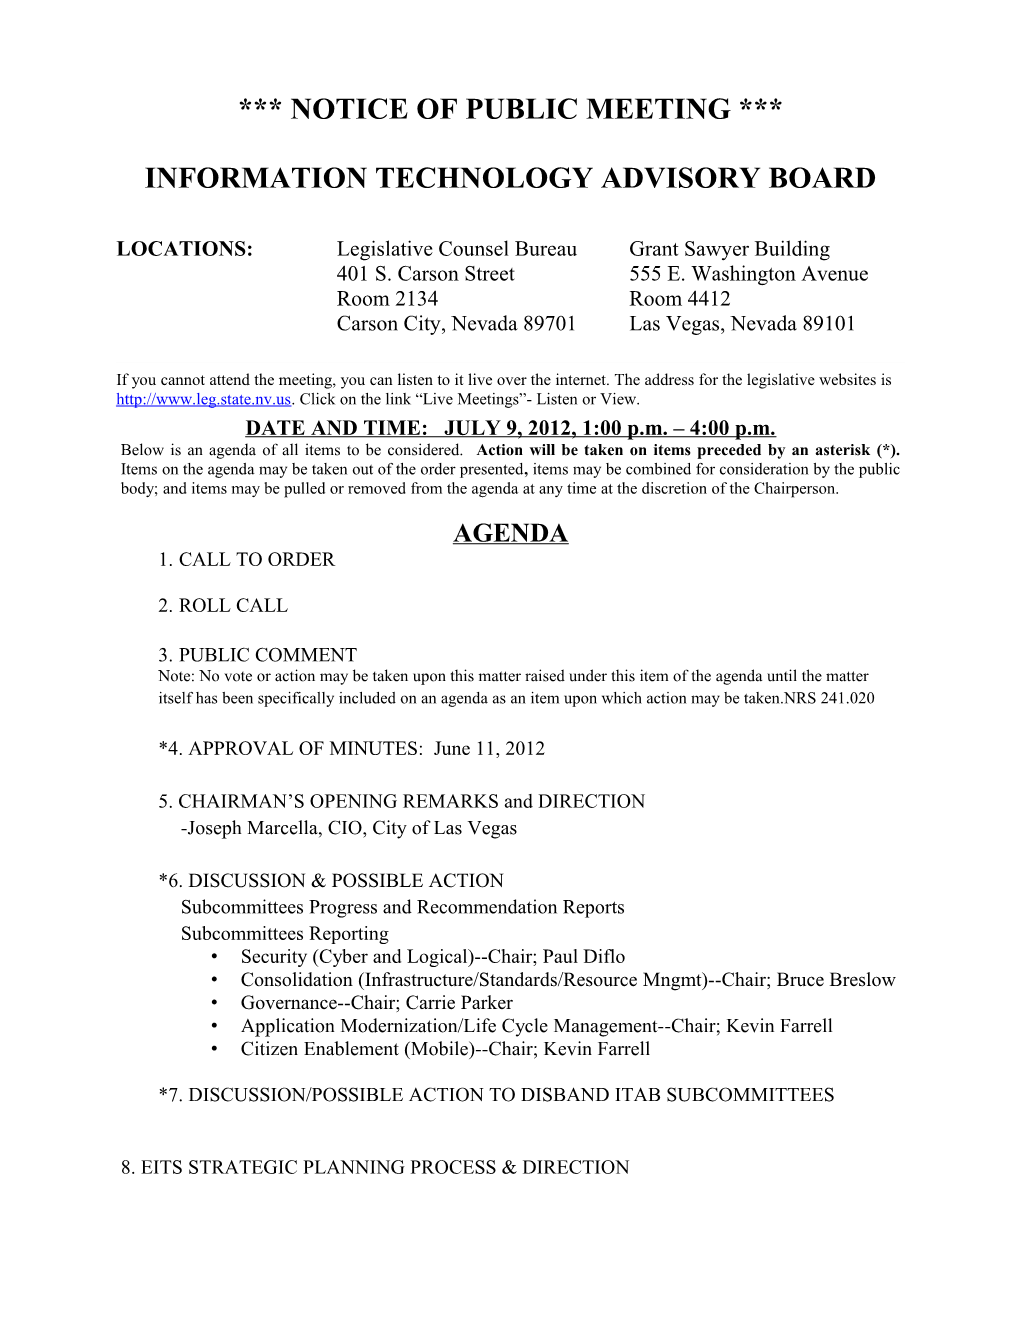 Information Technology Advisory Board s1